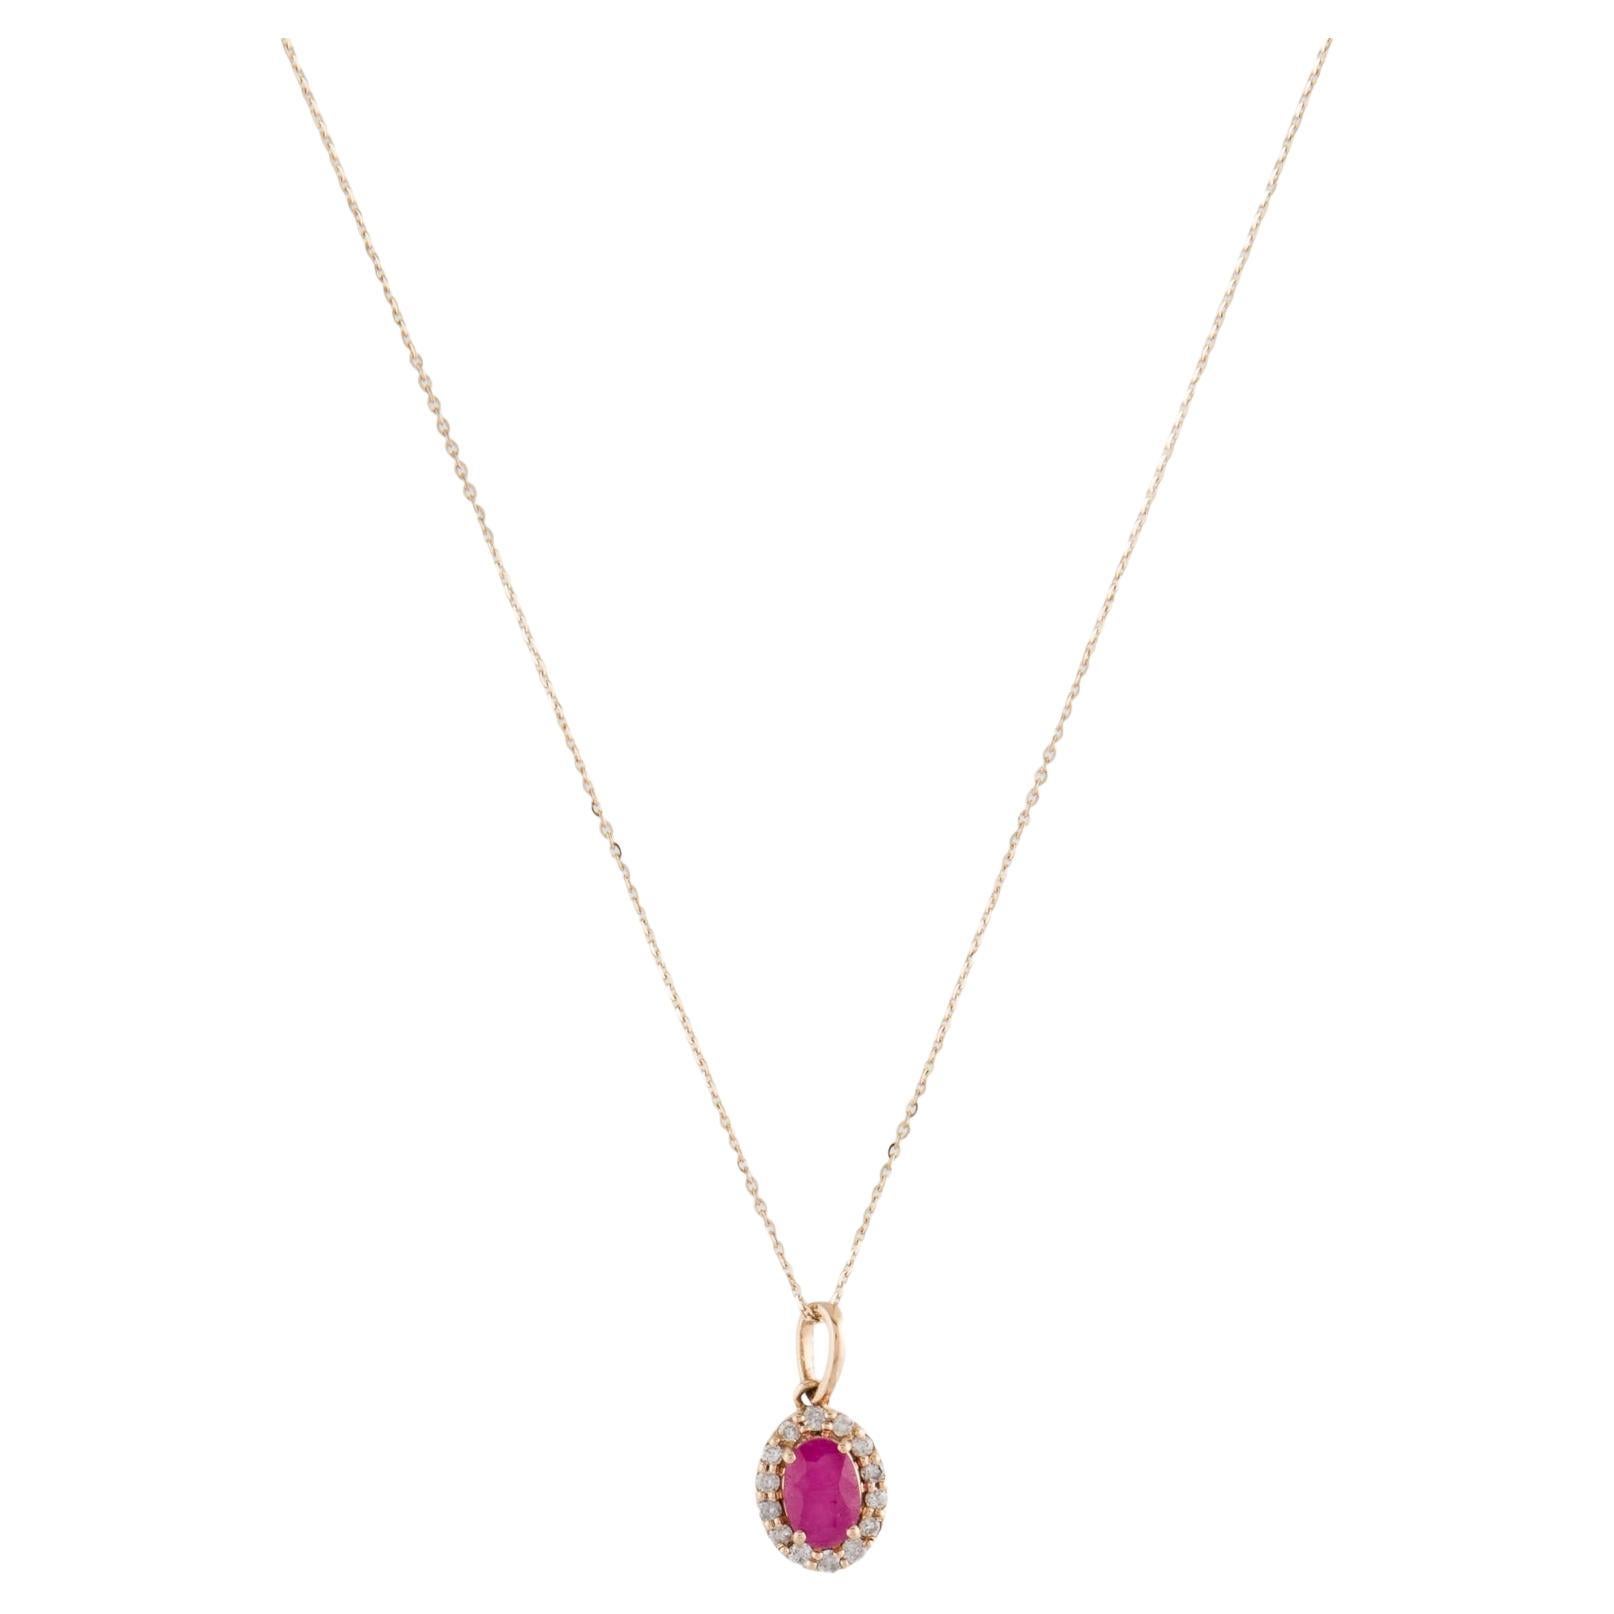 14K Ruby & Diamond Pendant Necklace - Stunning Gemstone Statement Piece (Collier de pierres précieuses)